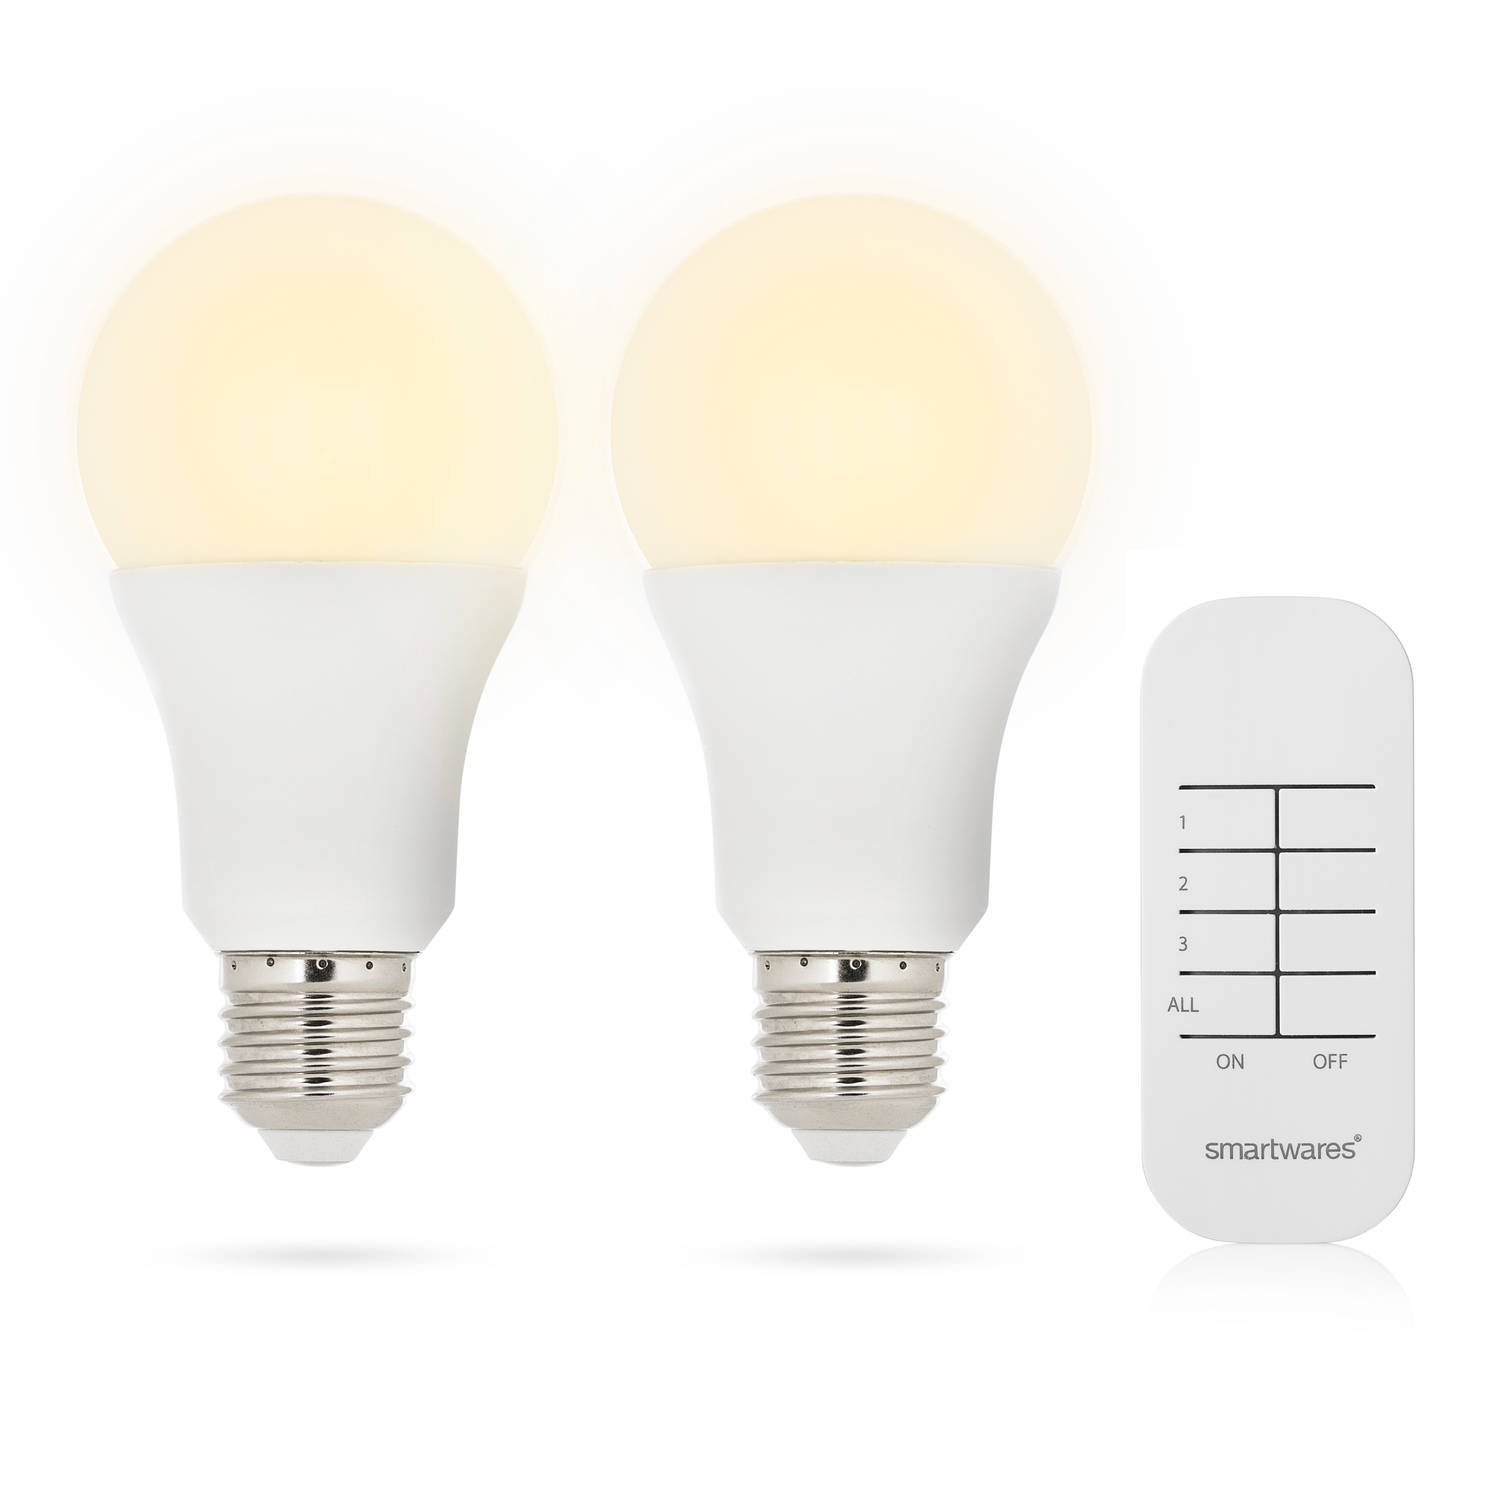 Smartwares slimme verlichting SH4-99550 - 2x 7 W LED lamp - Smarthome Basic